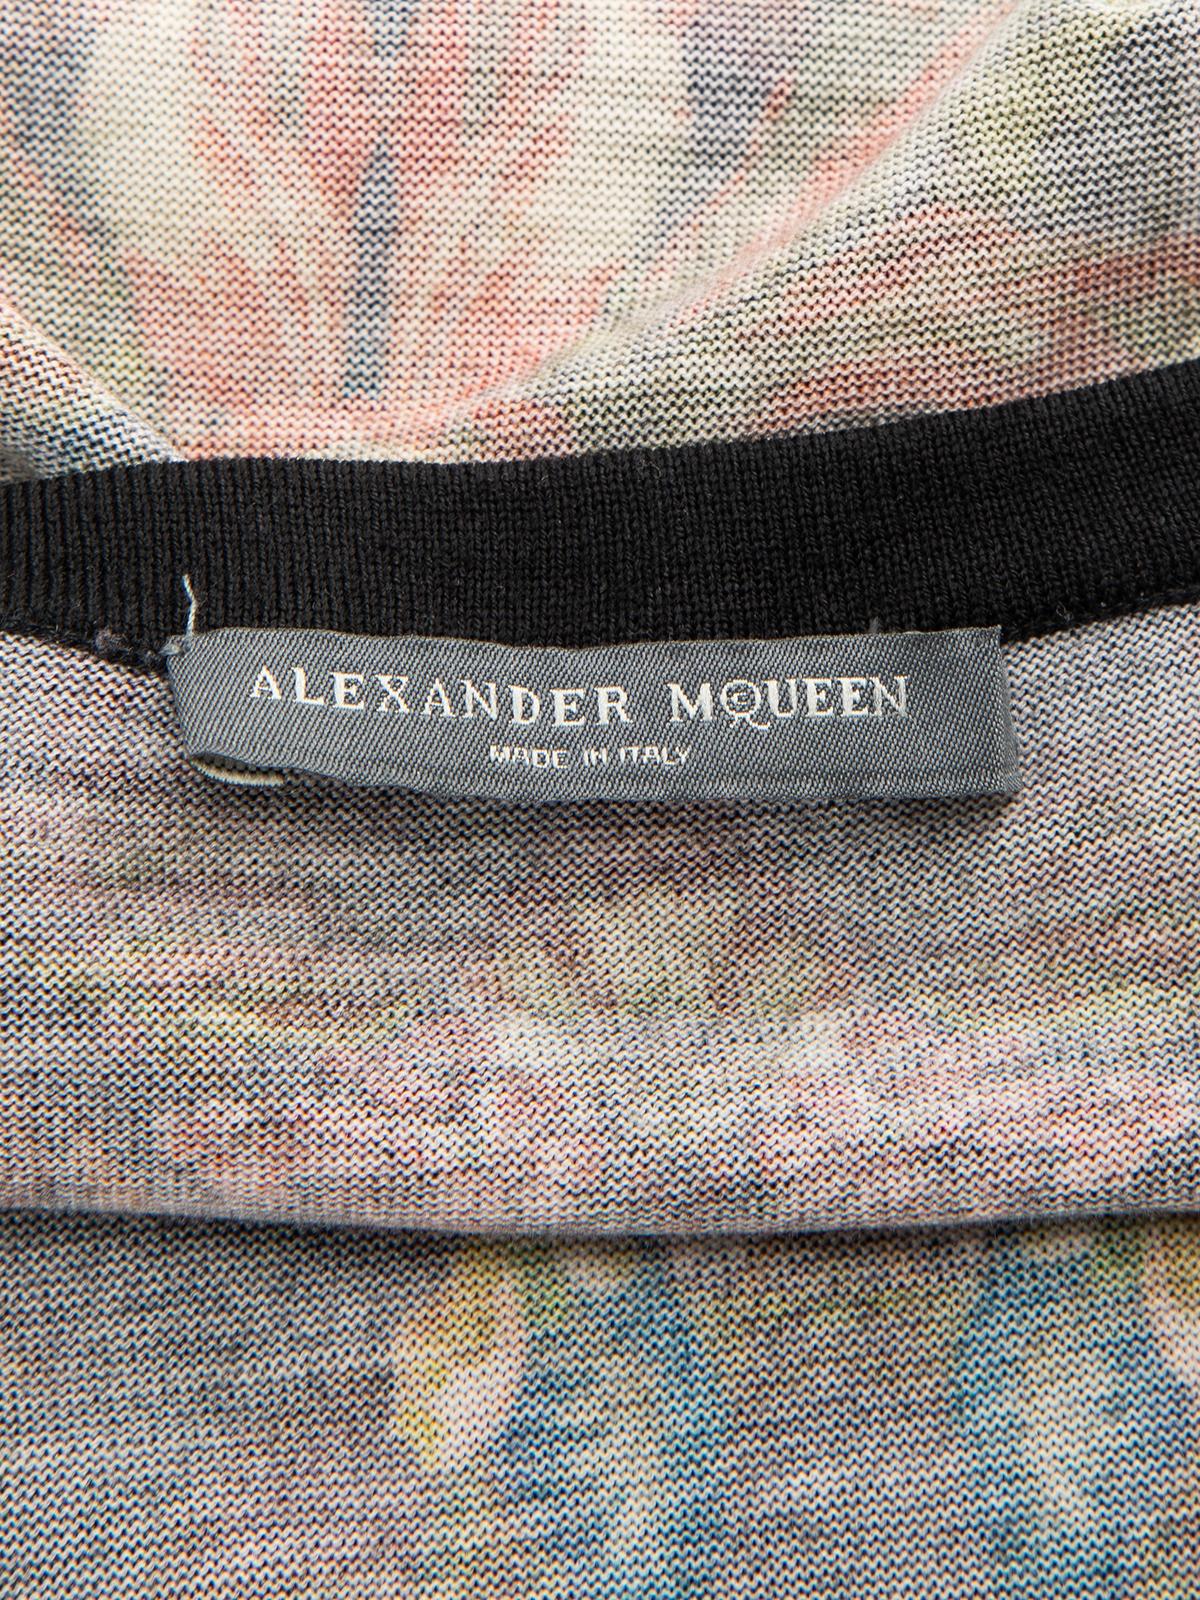 Pre-Loved Alexander McQueen Women's Long Sleeved Black Floral Patterned Wool 3